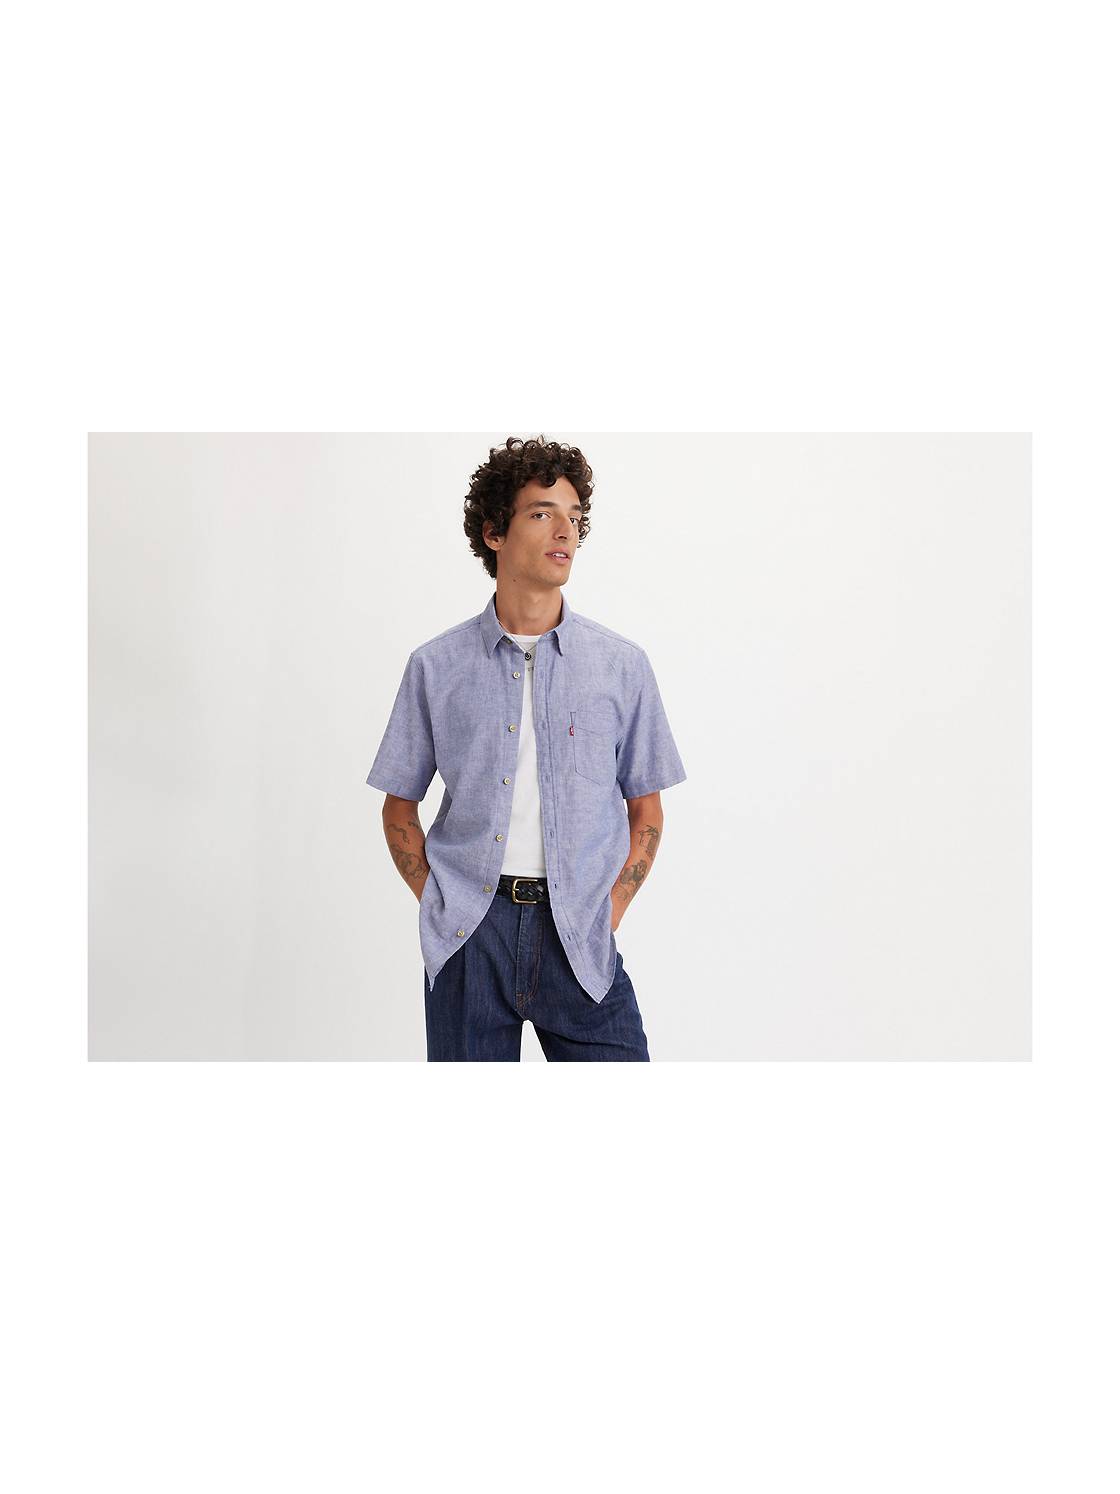 Blu - Short Sleeve Shirt - B-1947314 Clearance